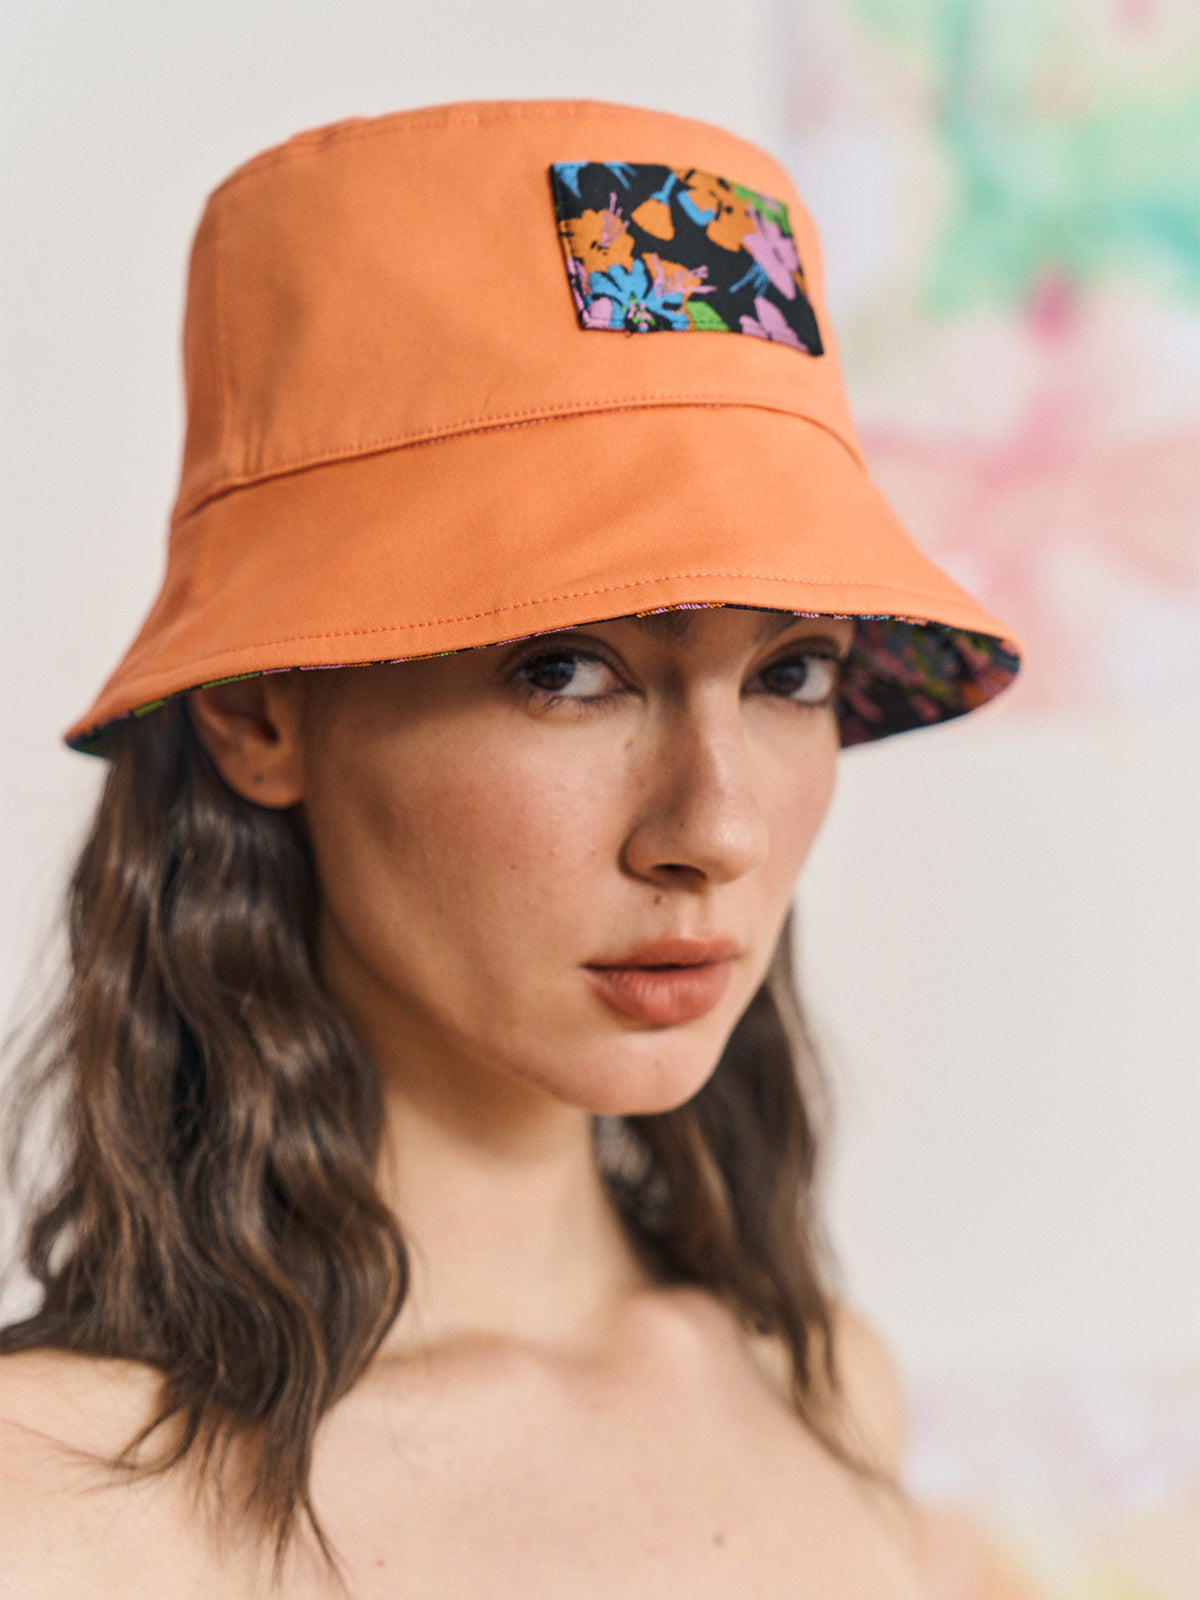 FRIDA X LOST PATTERN "Frida's Garden" Jacquard Reversible Bucket Hat - Salmon - LOST PATTERN Hats